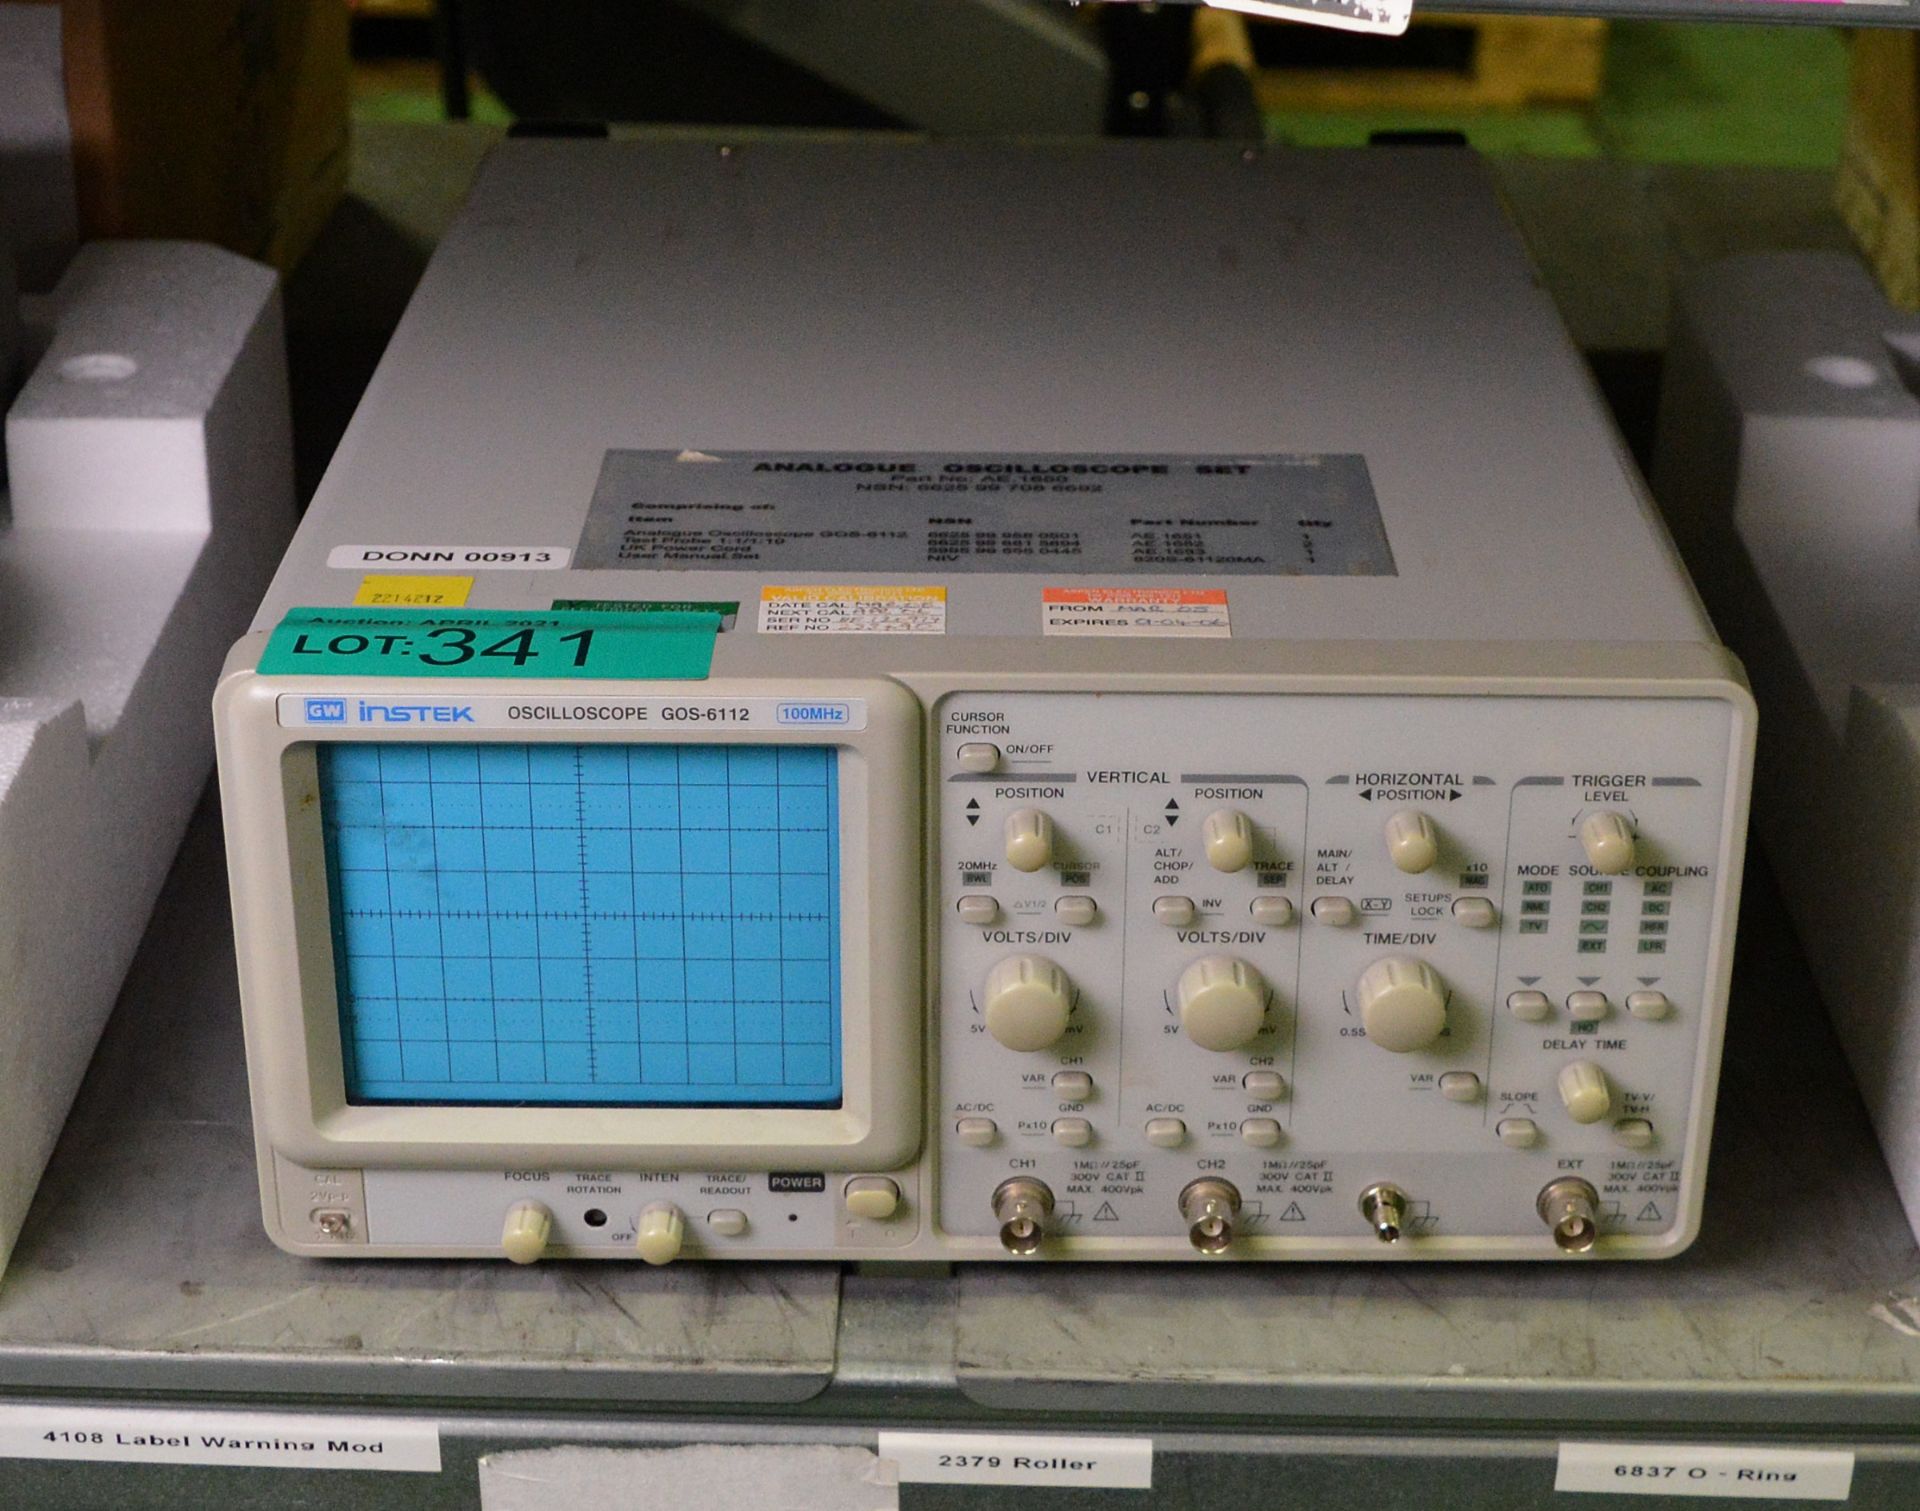 GW Instek GOS-6112 Oscilloscope - 100MHz